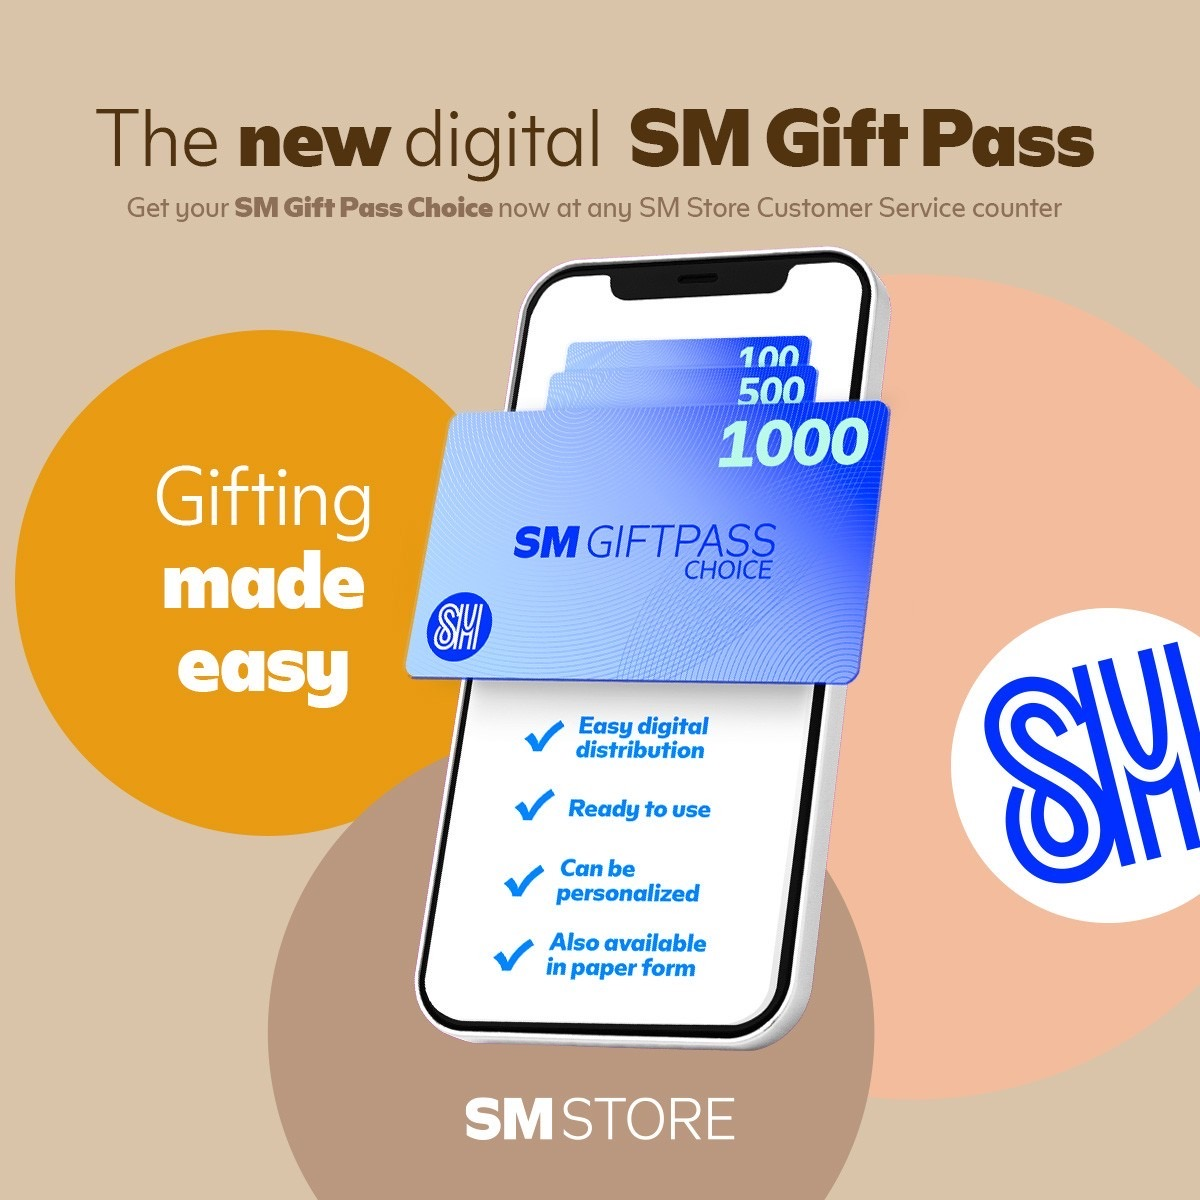 SM GiftPass Choice